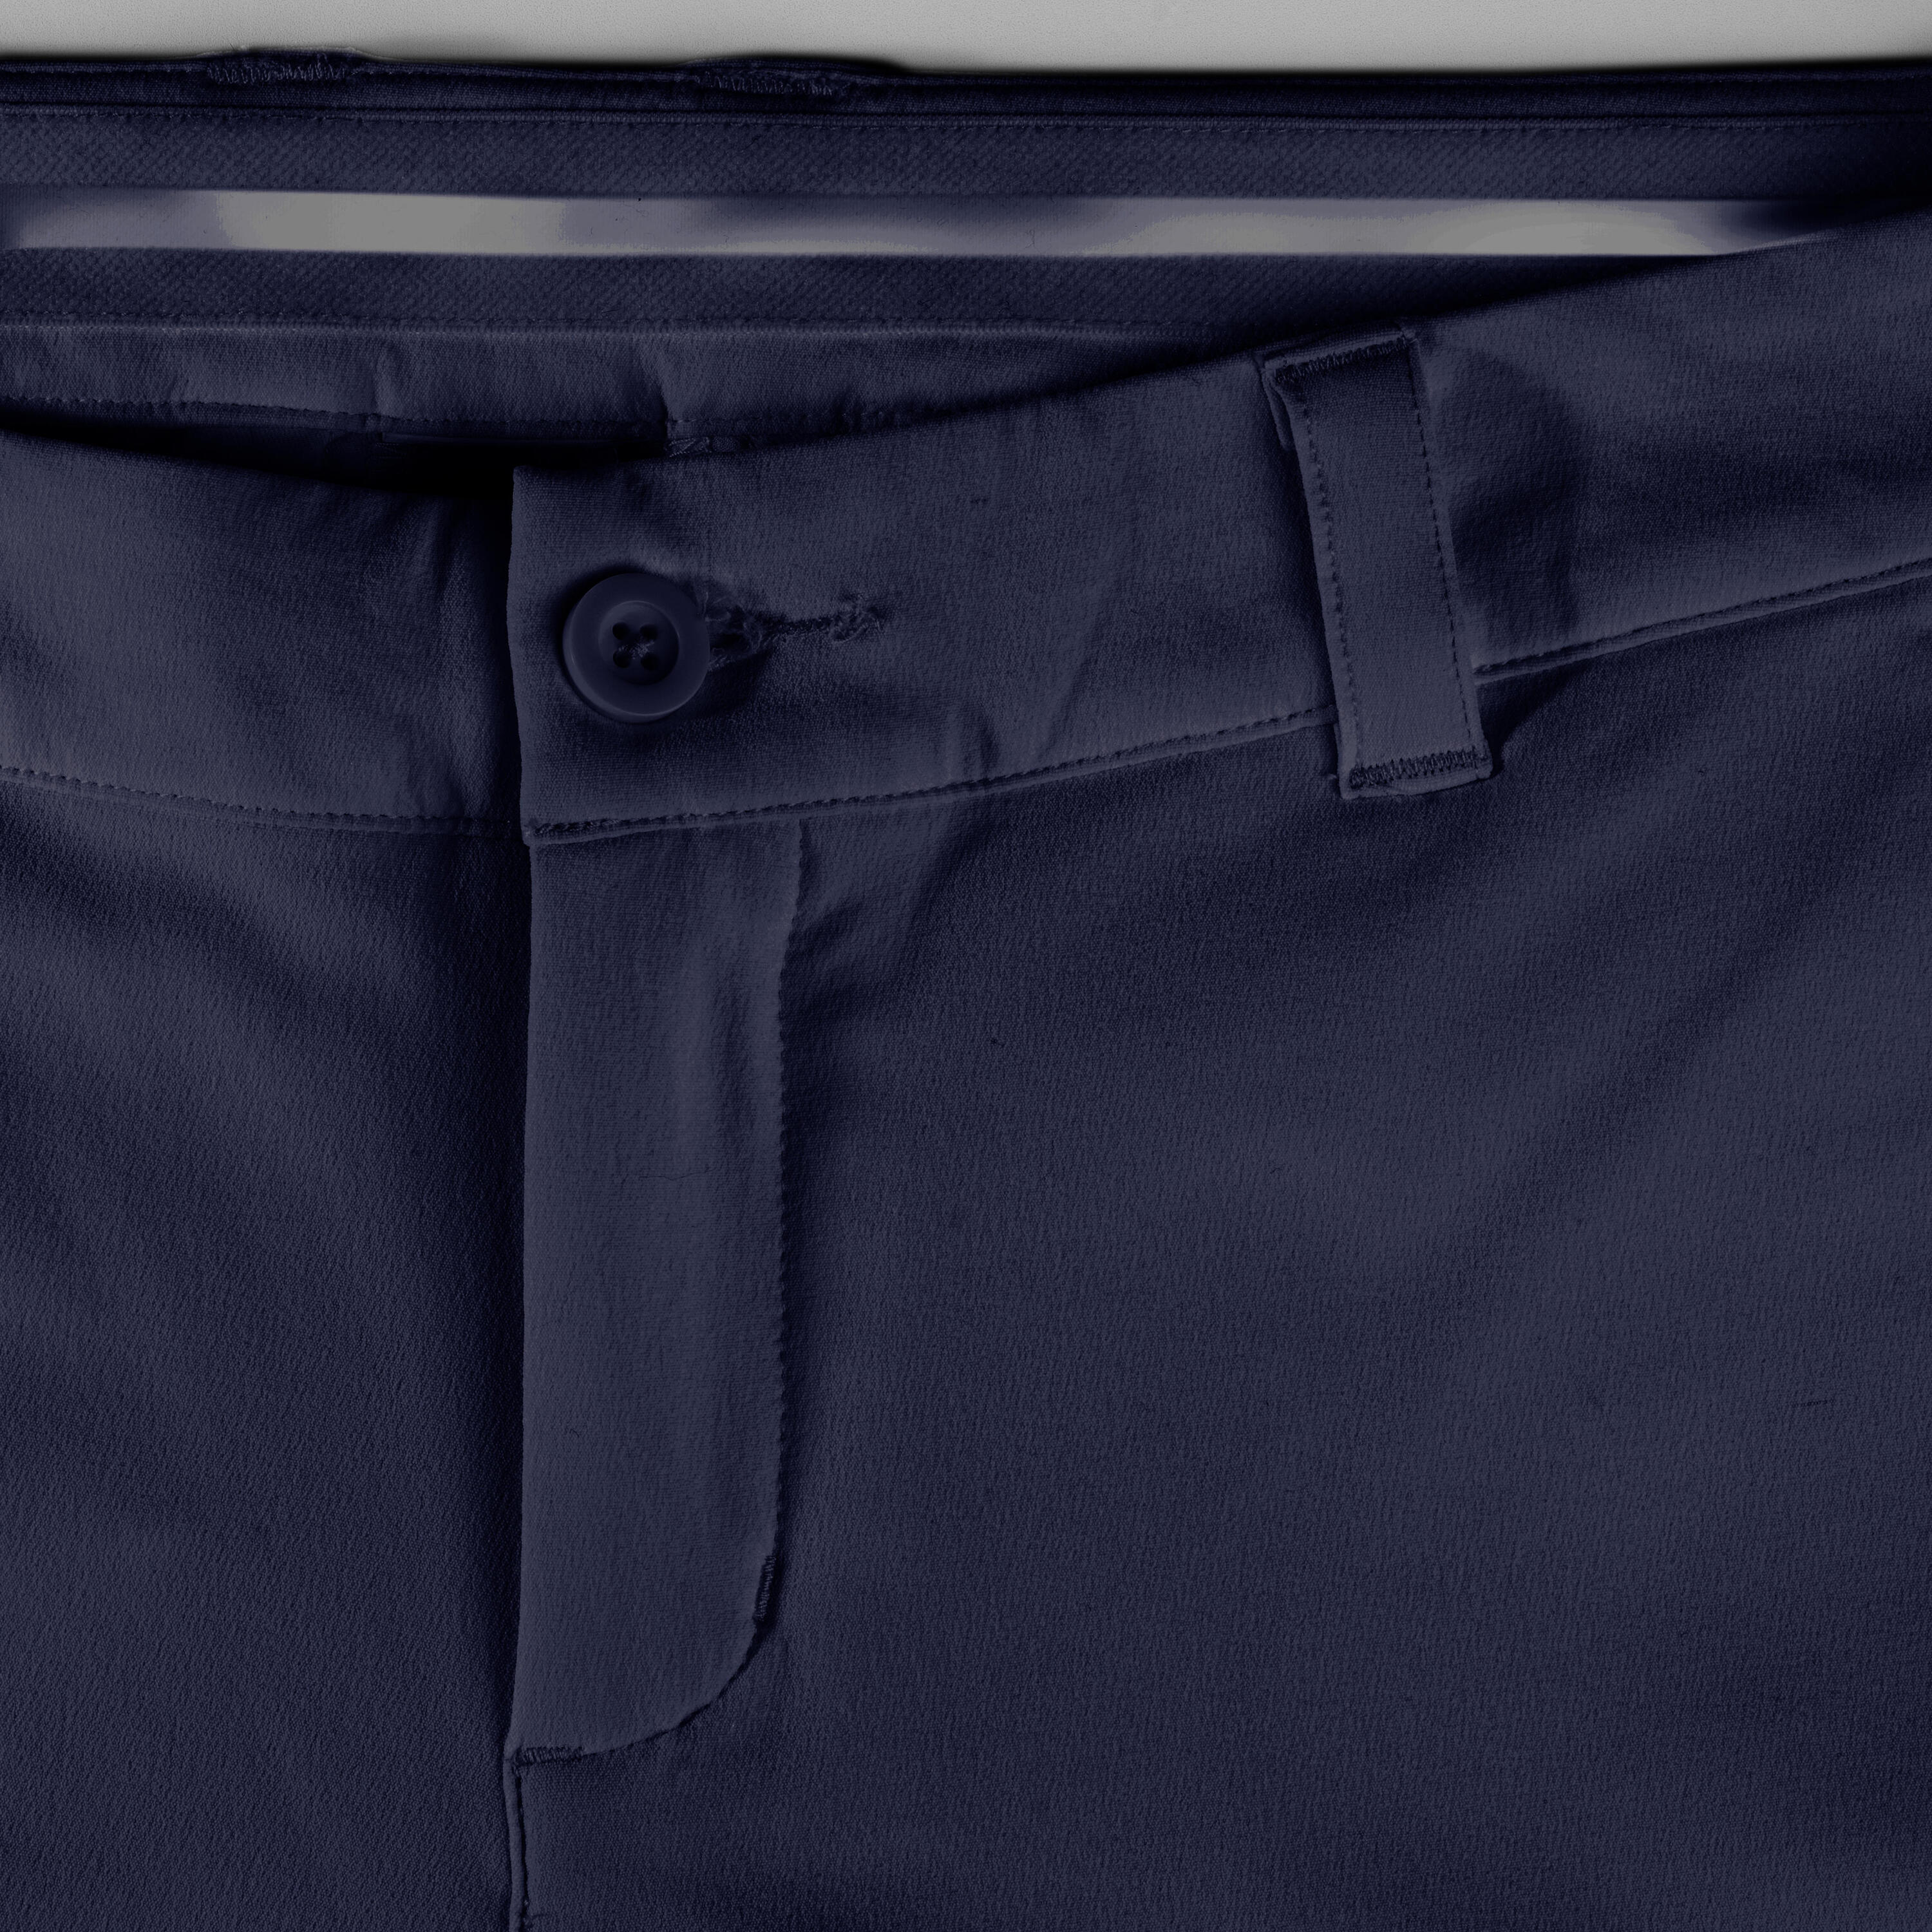 Women's golf winter trousers - CW500 navy blue 5/6